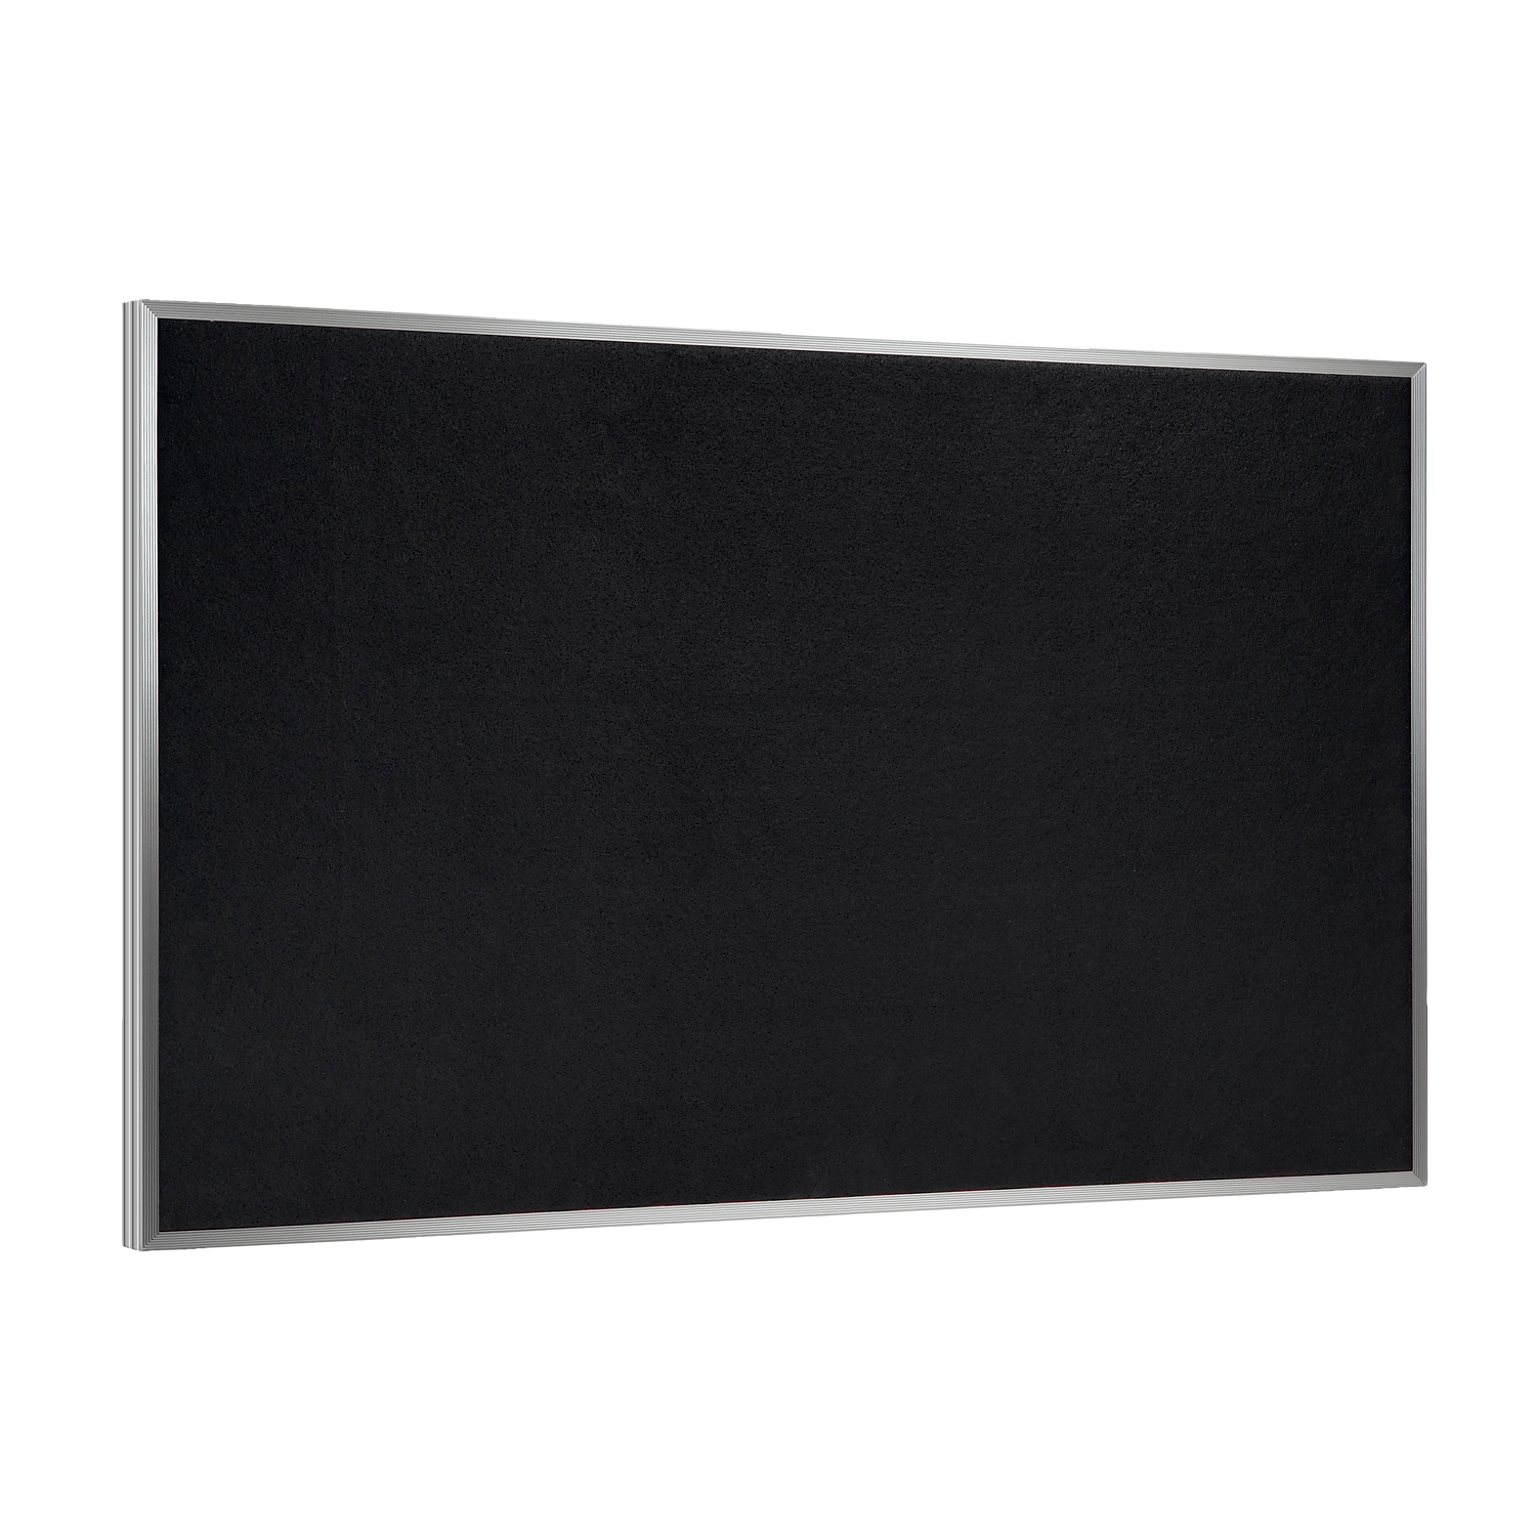 Ghent 2 H x 3 W Recycled Bulletin Board with Aluminum Frame, Black (ATR23-BK)